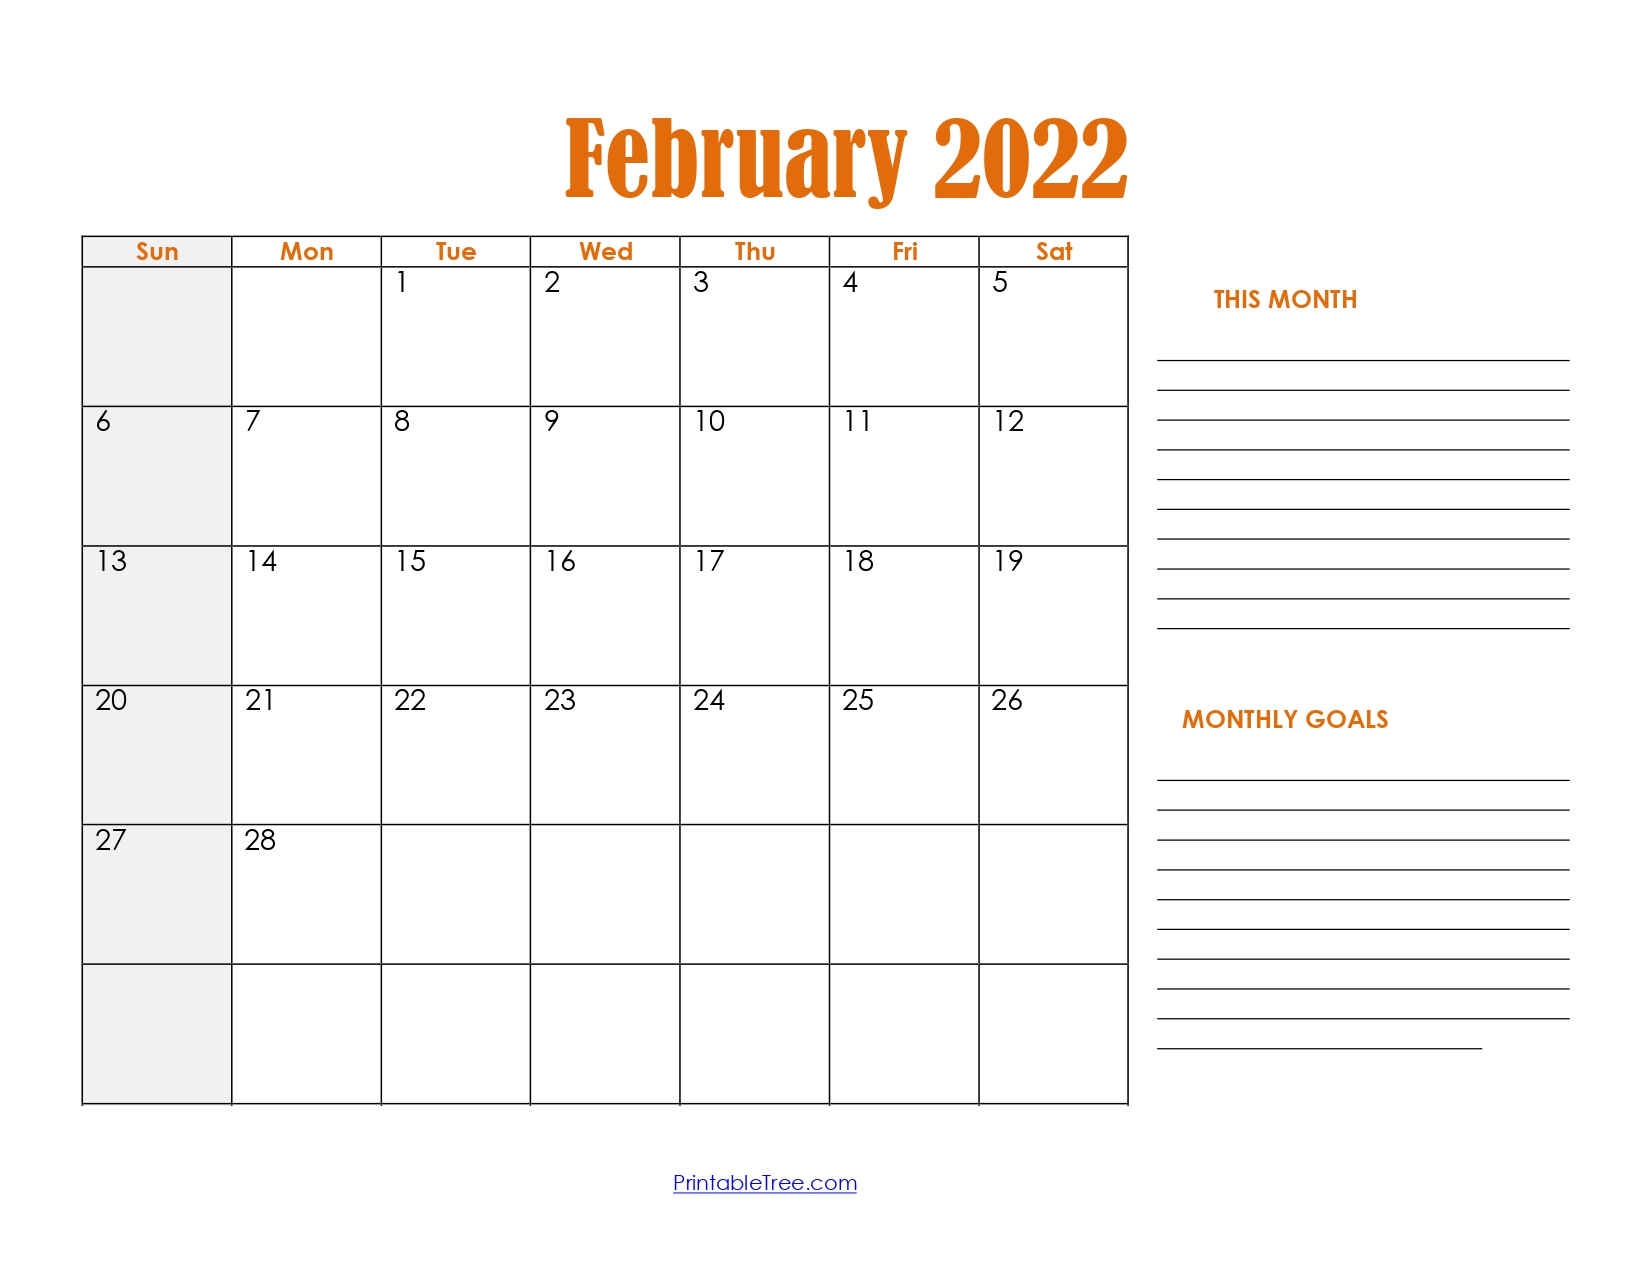 February 2022 Calendar with Goals